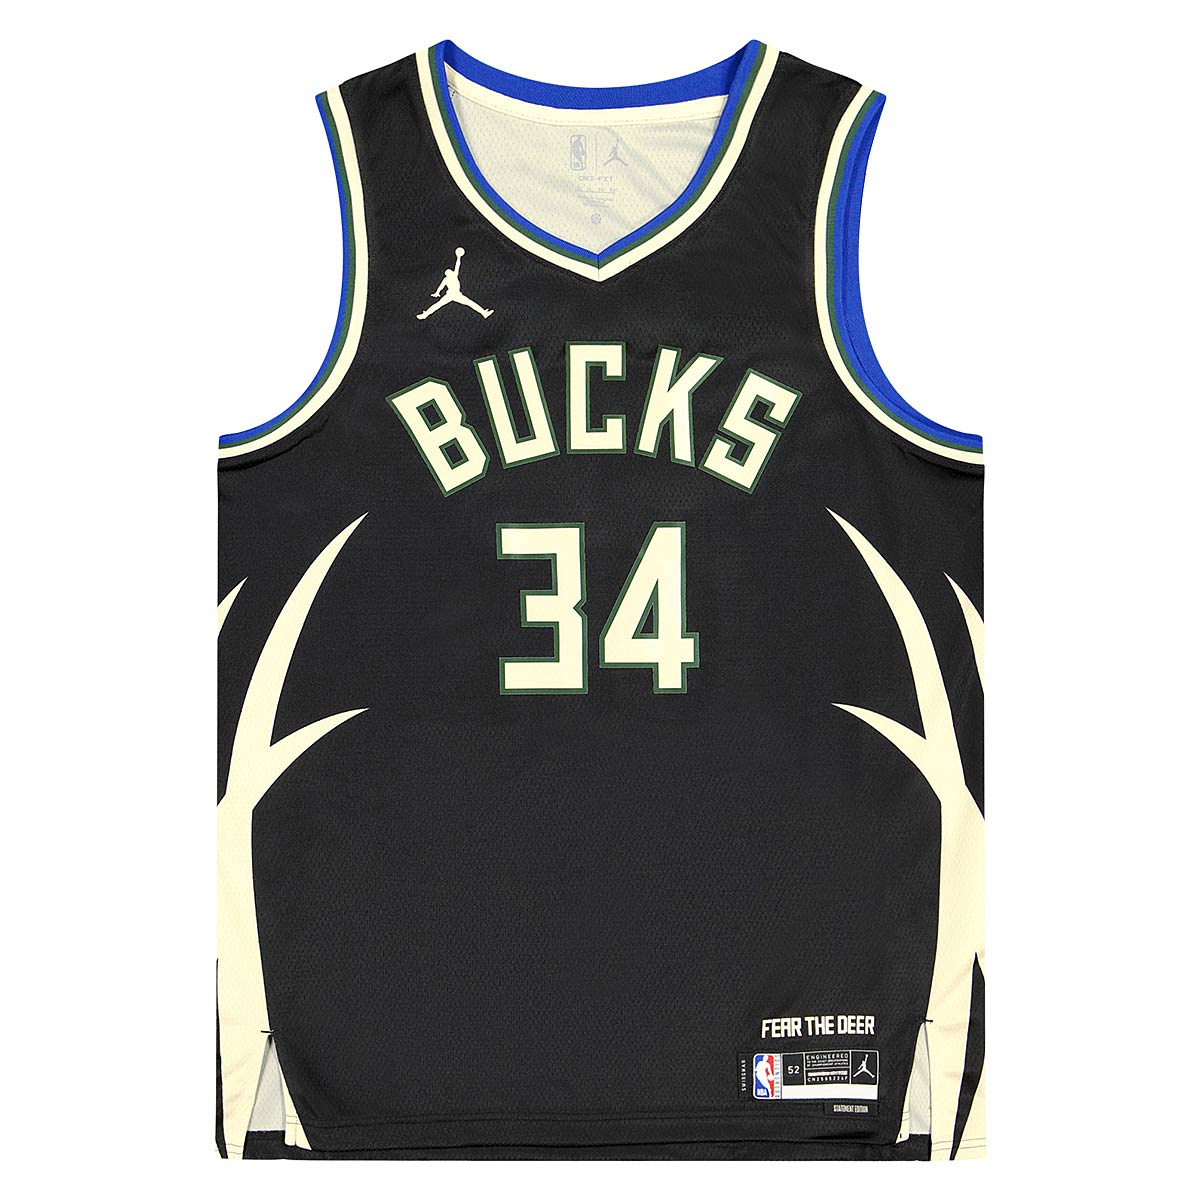 Milwaukee Bucks - The new Giannis Antetokounmpo jersey is